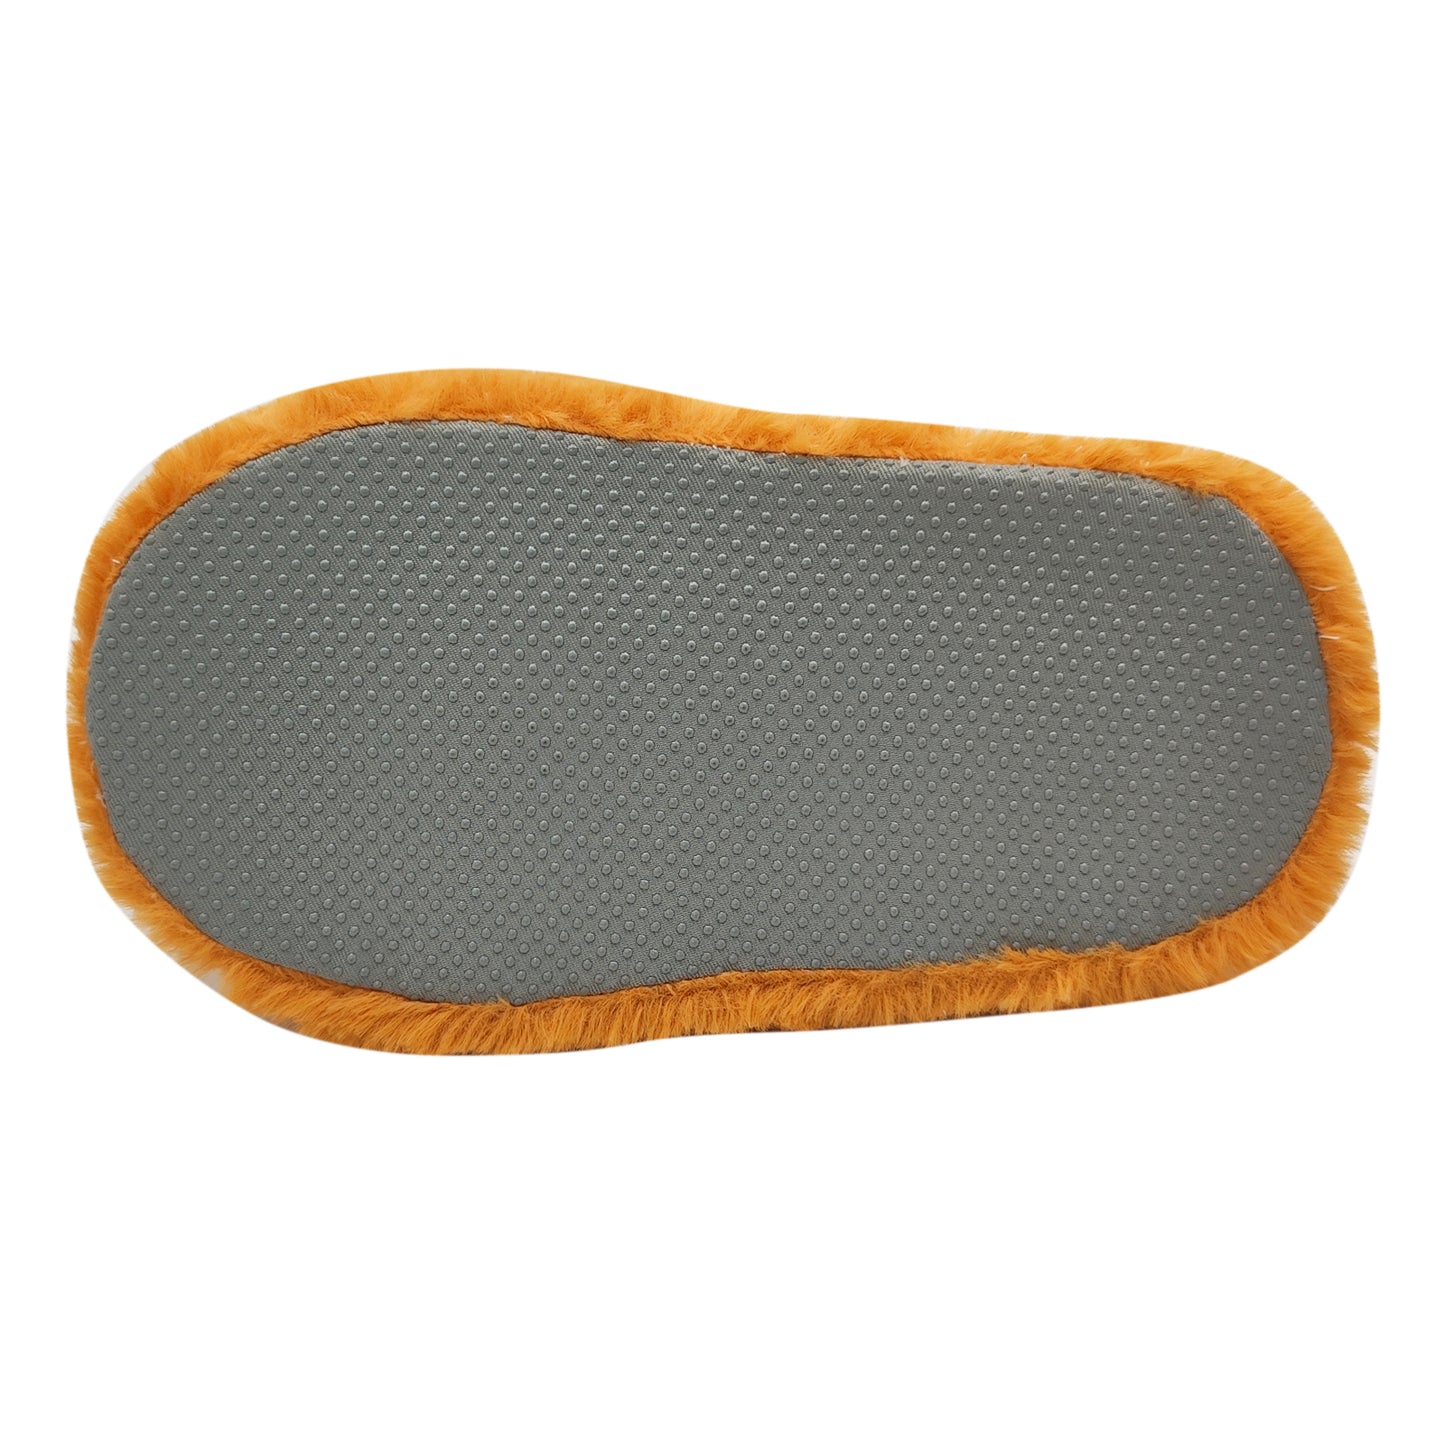 Corgi slippers anti-slip soles